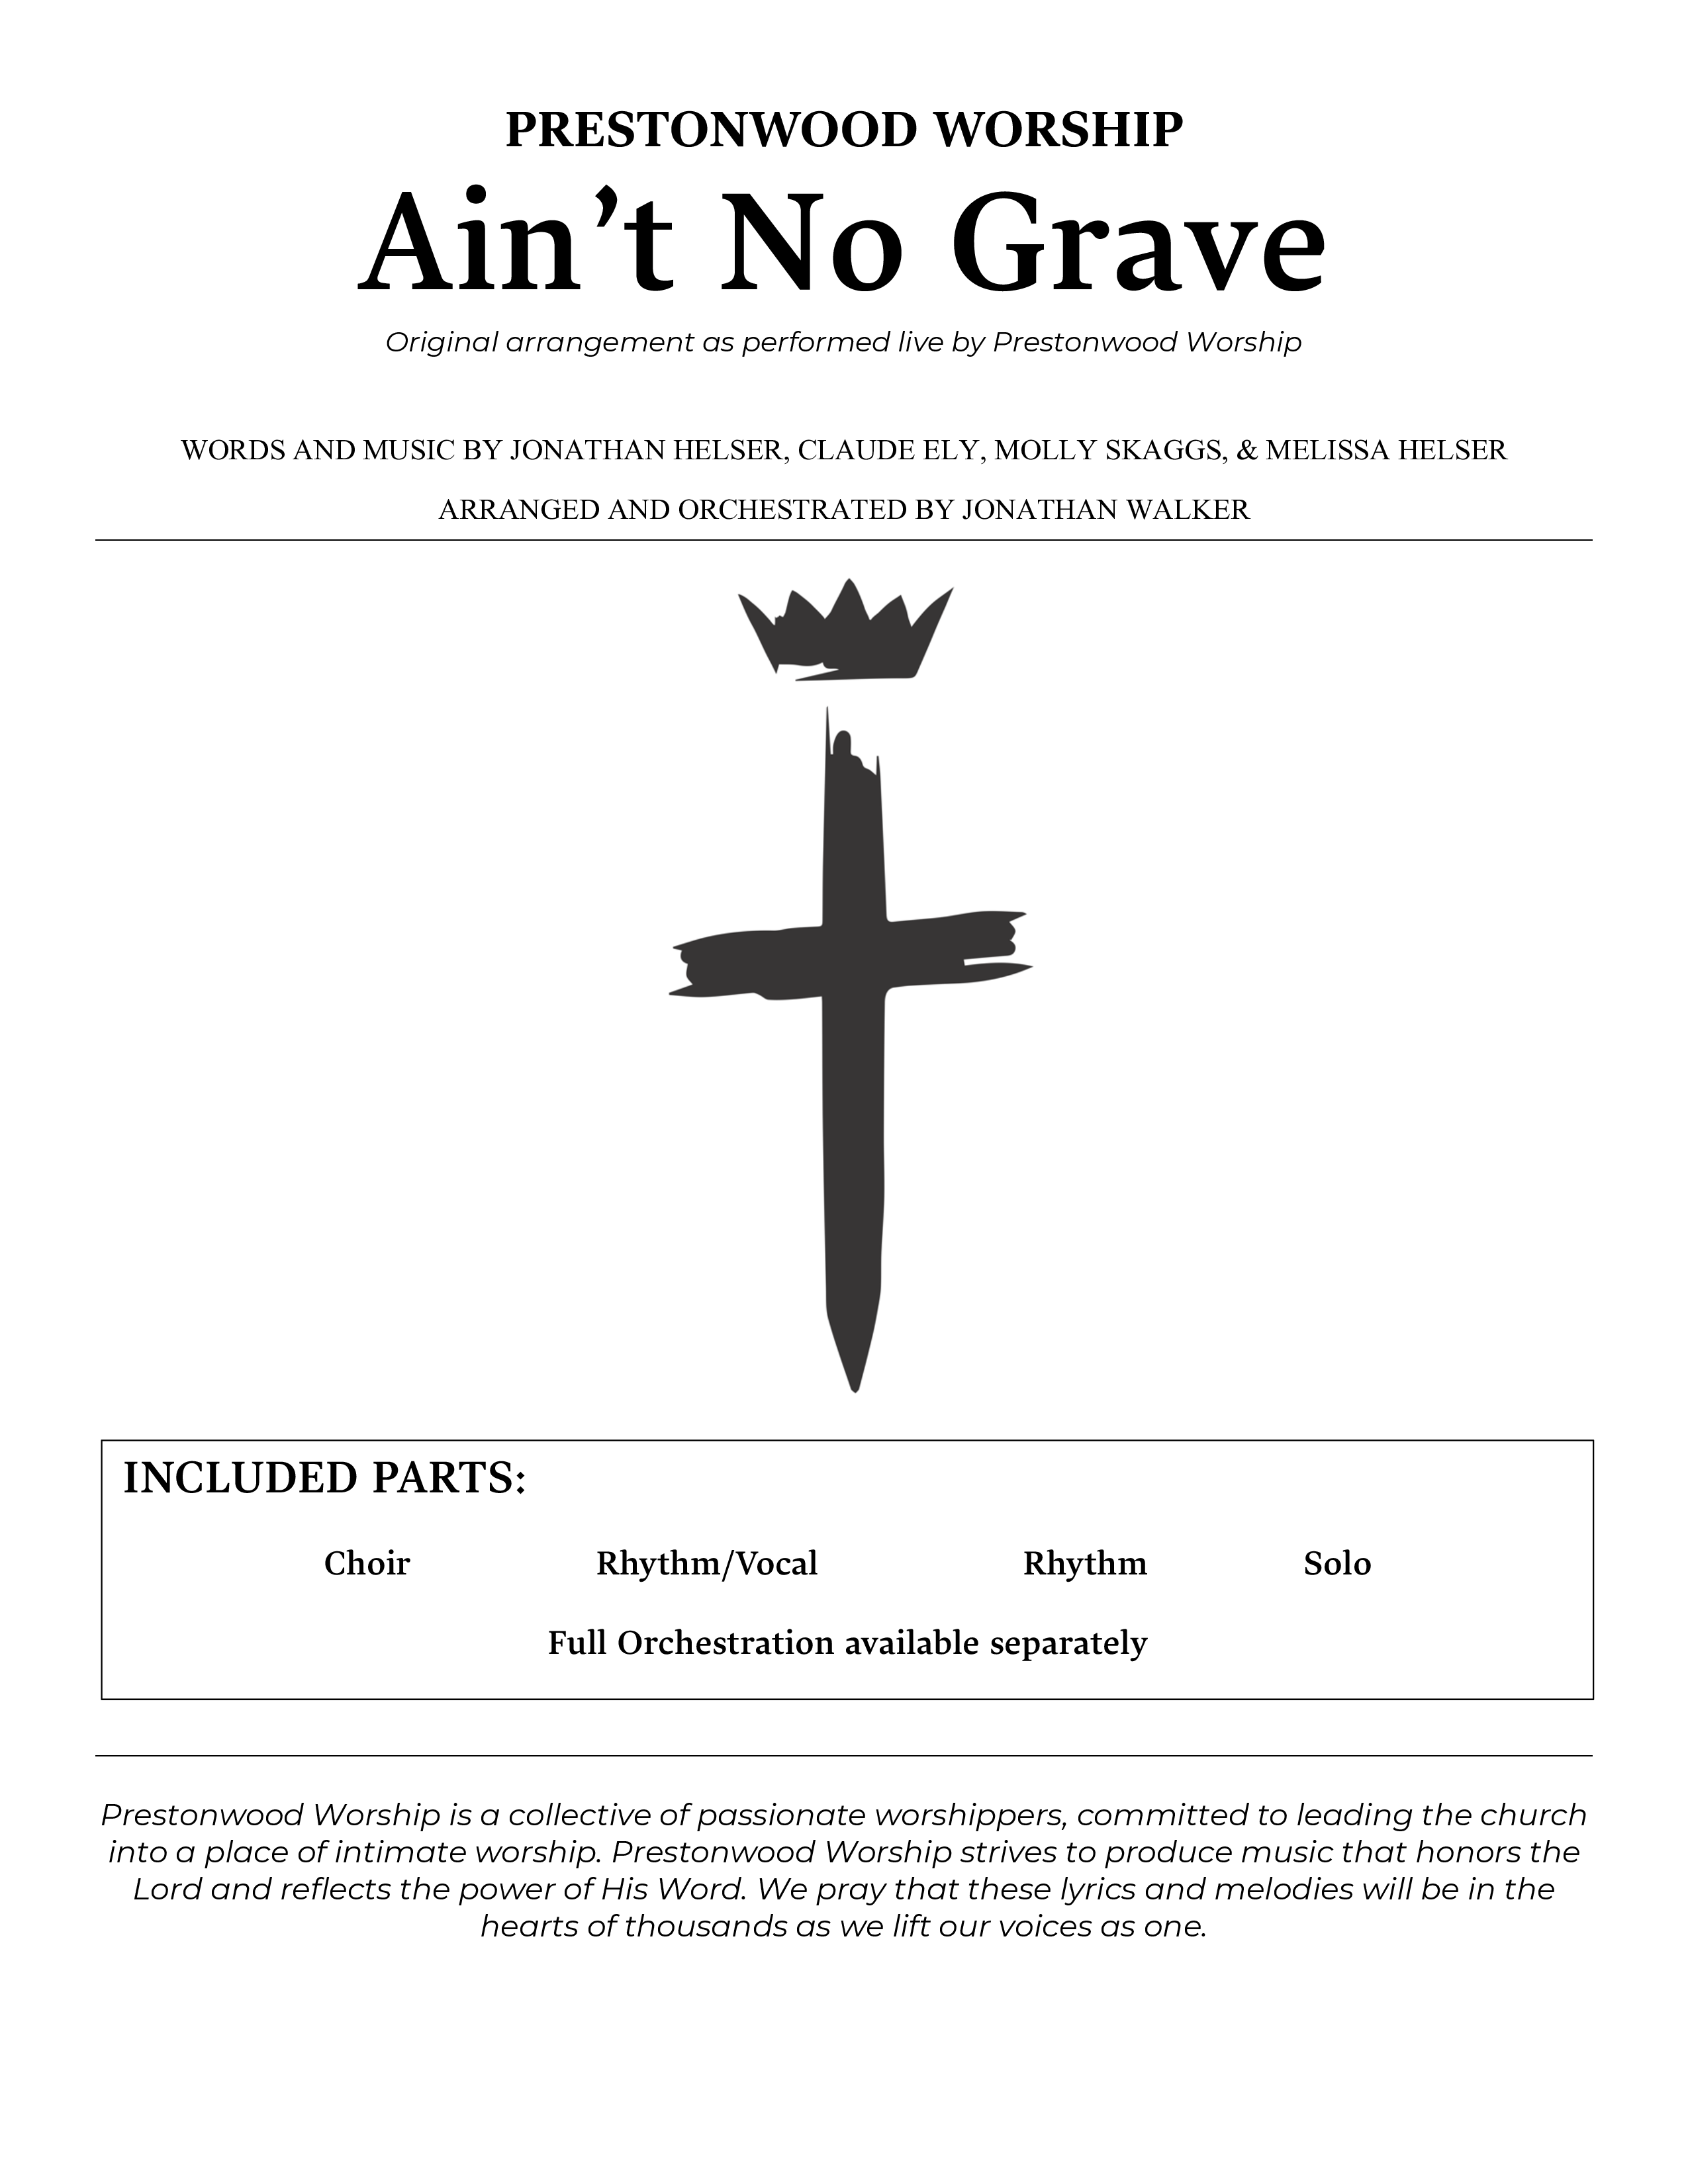 Ain't No Grave (Choral Anthem SATB) Cover Sheet (Prestonwood Choir / Prestonwood Worship / Arr. Jonathan Walker)